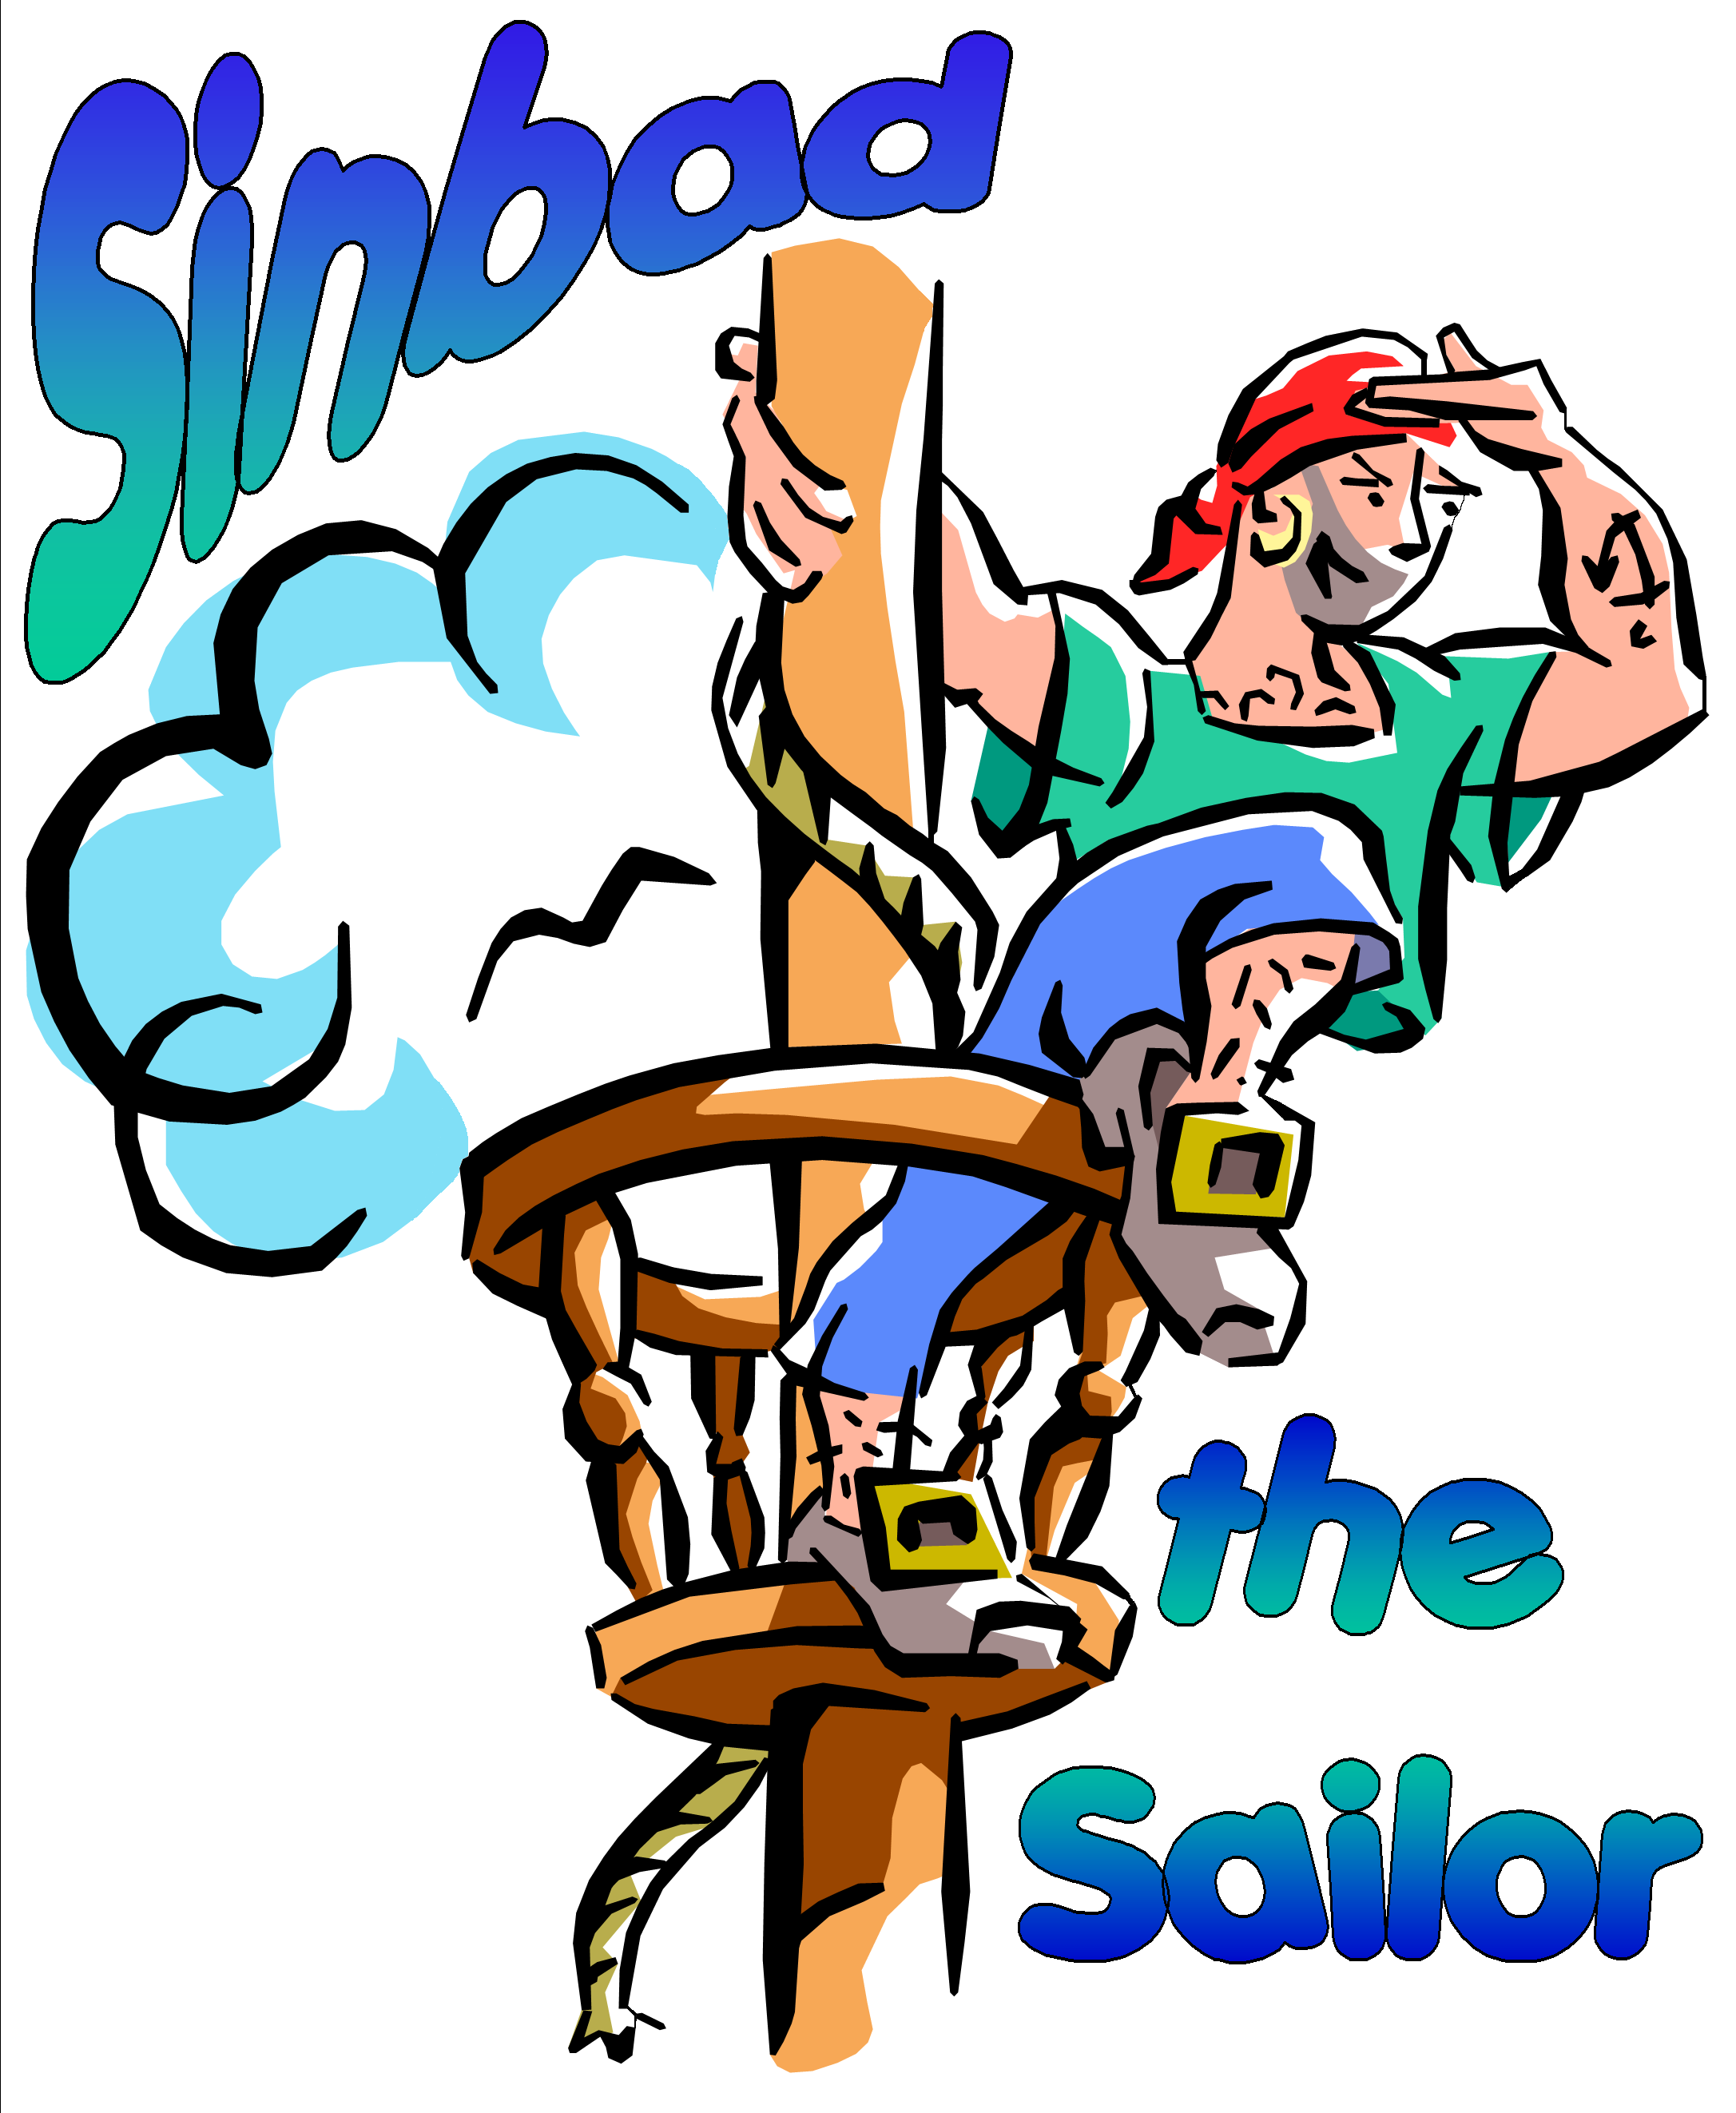 Sinbad the . Sailor clipart female sailor